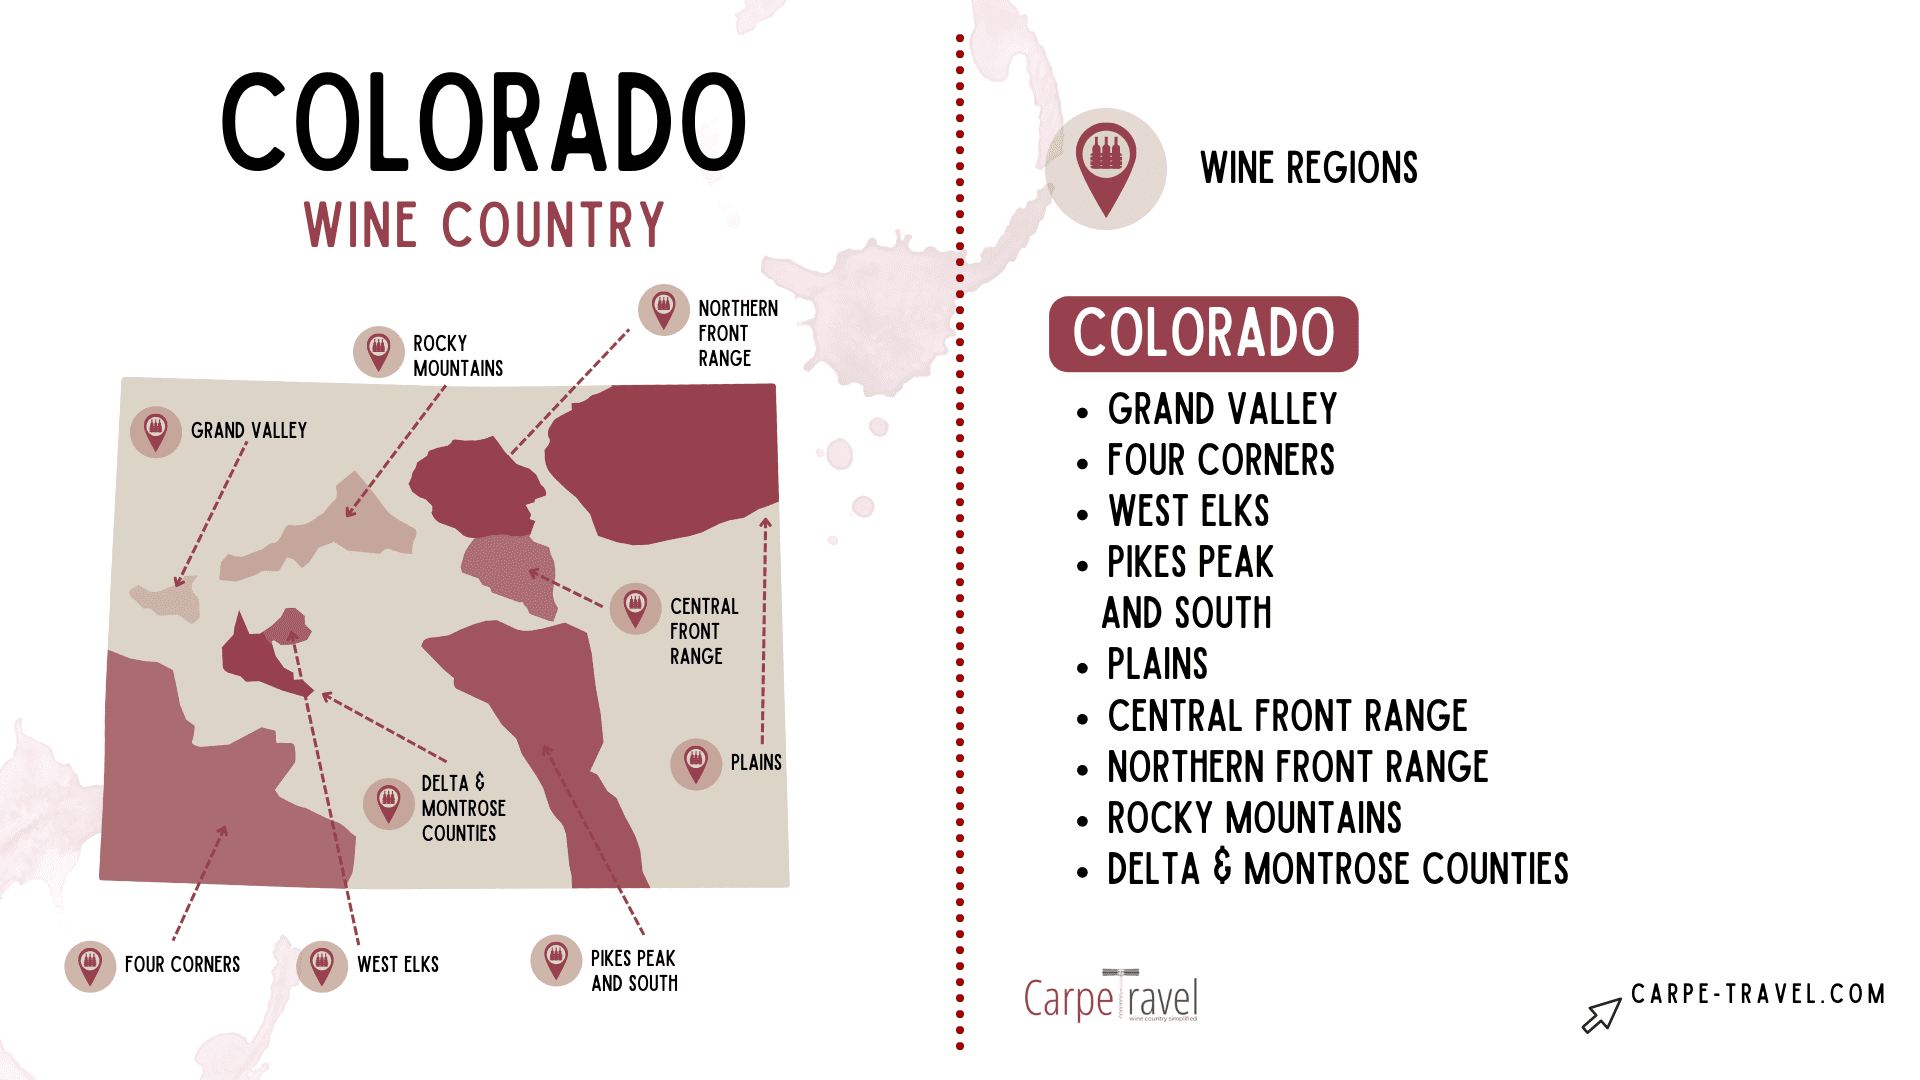 Colorado Wine Country Travel Guide